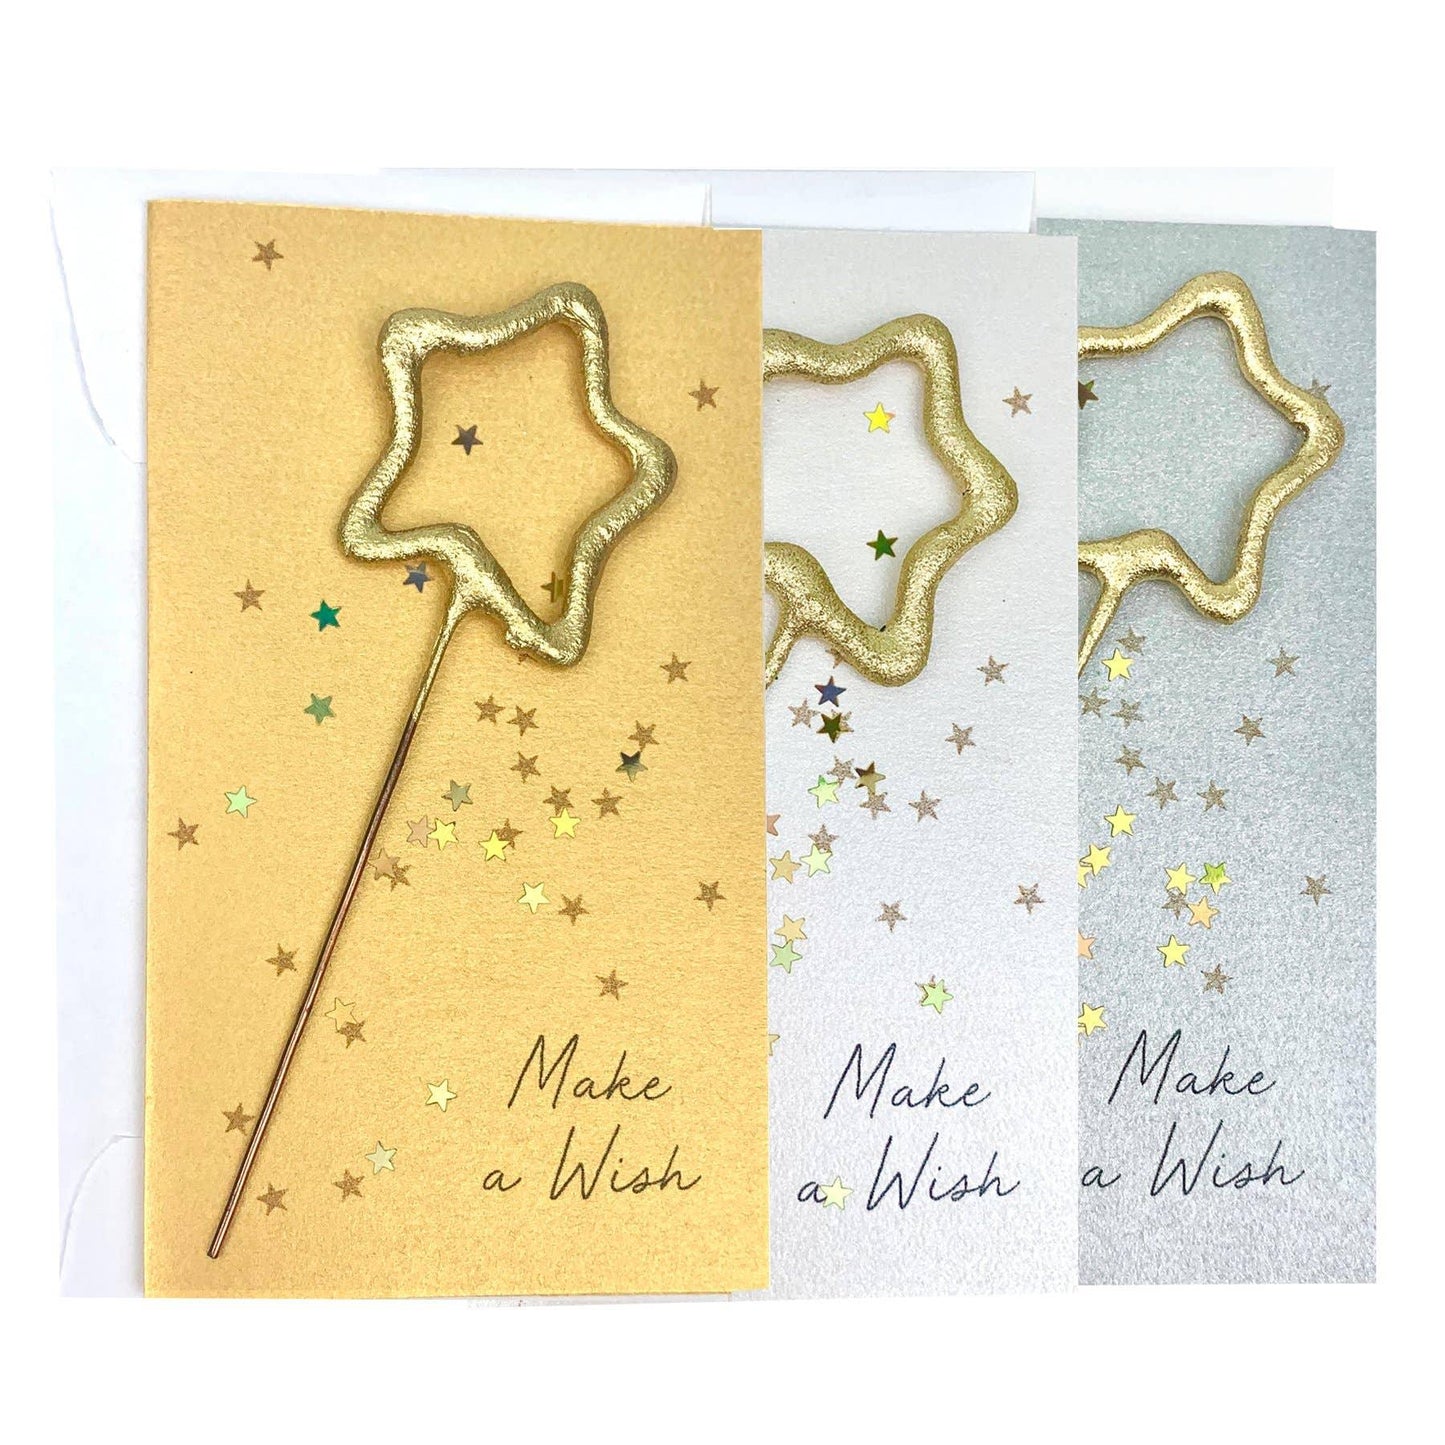 Confetti Sparkler Cards Make A Wish! - The Silver Dahlia